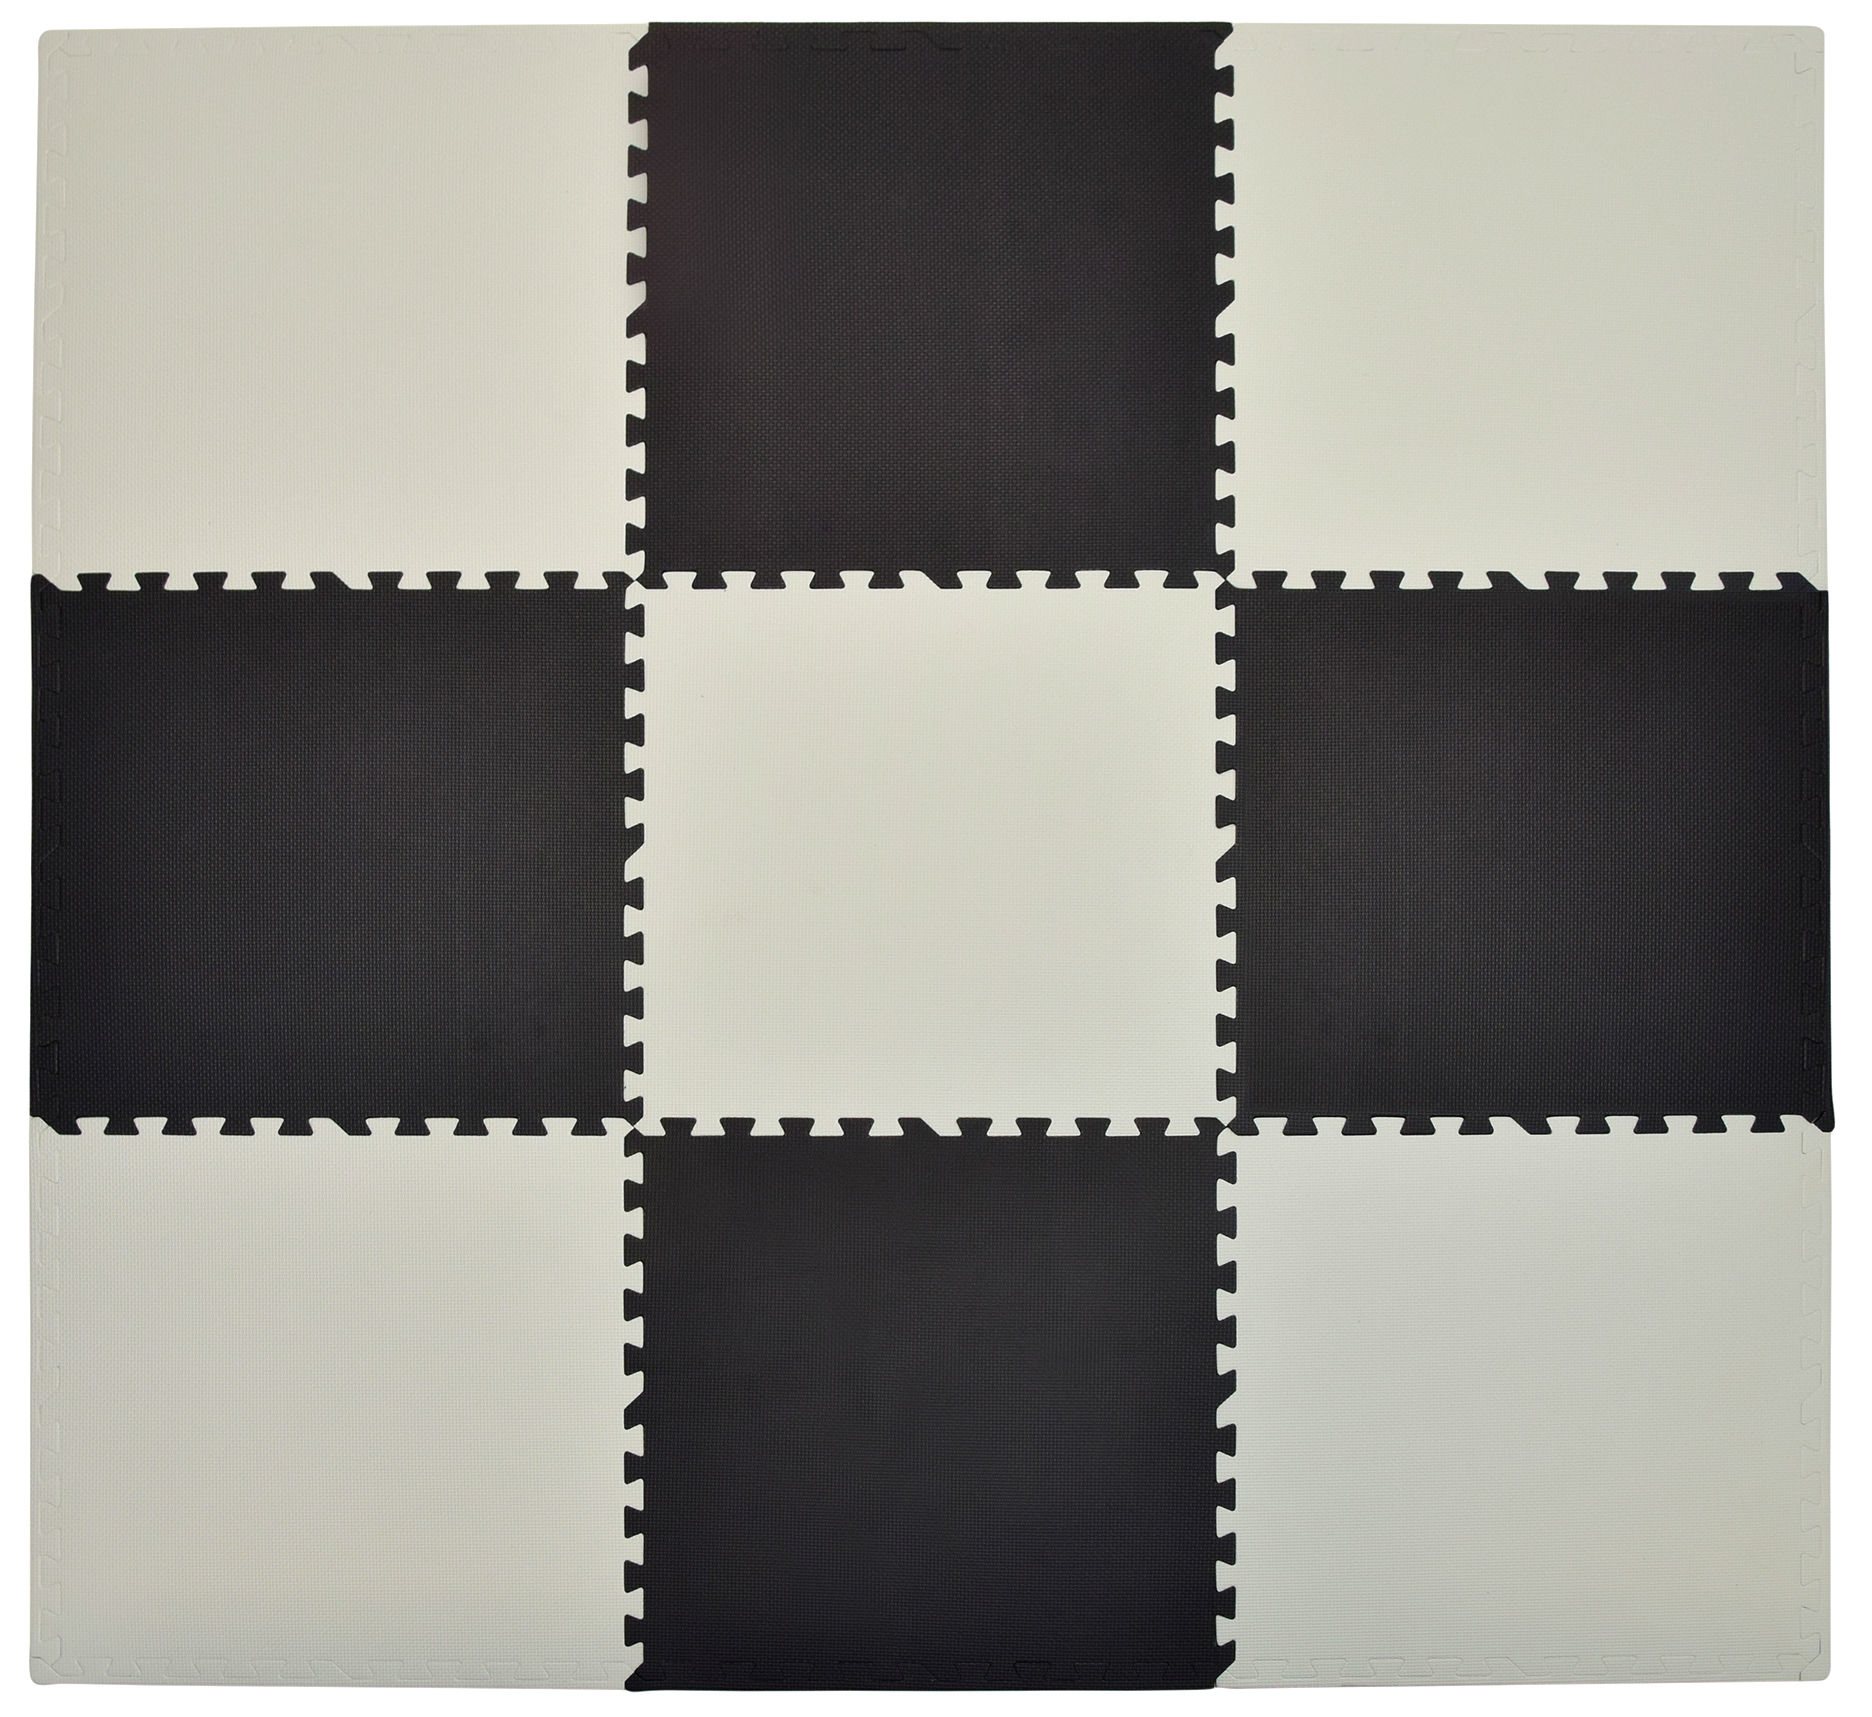 Humbi Mata piankowa Puzzle piankowe 180 x 180 x 1cm 9 szt. kontrastowa szachownica